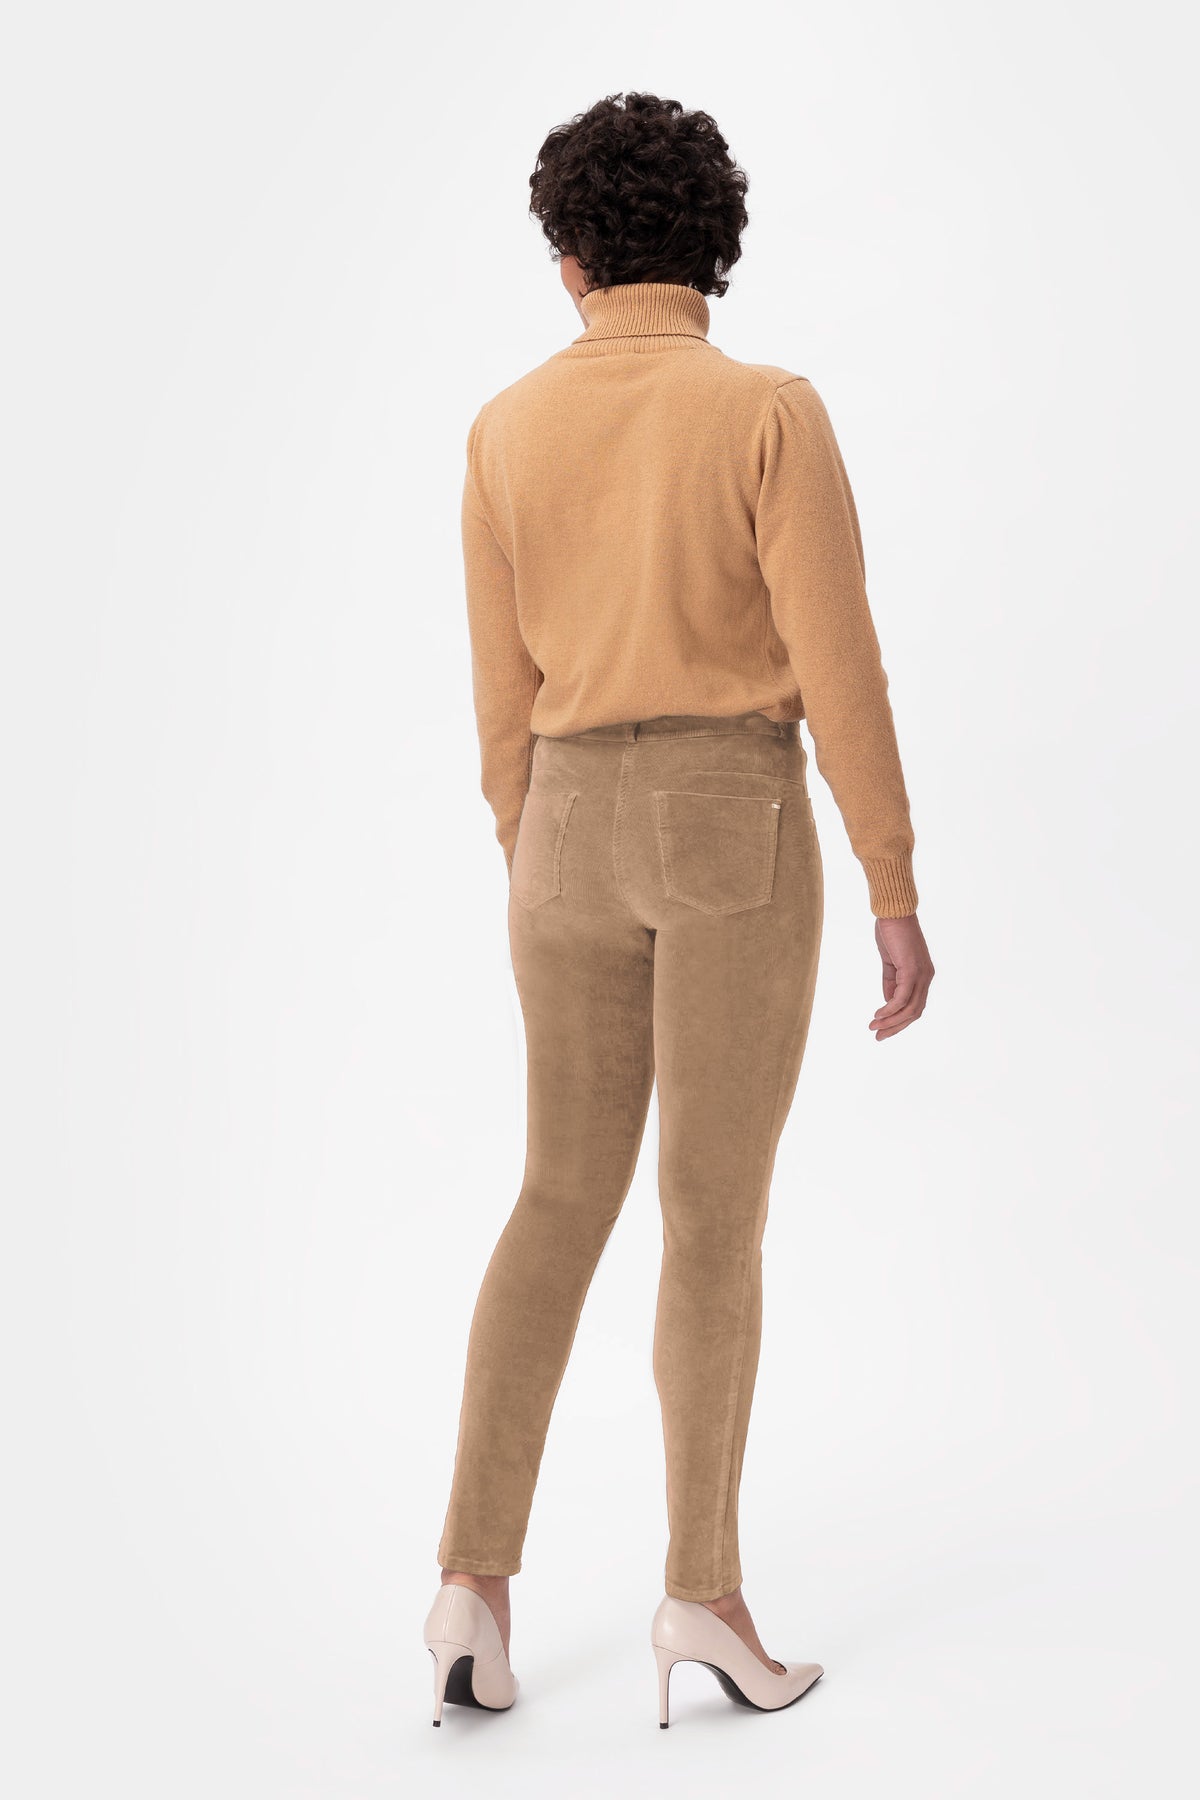 Adele V2 Pantalone Velluto senza zip